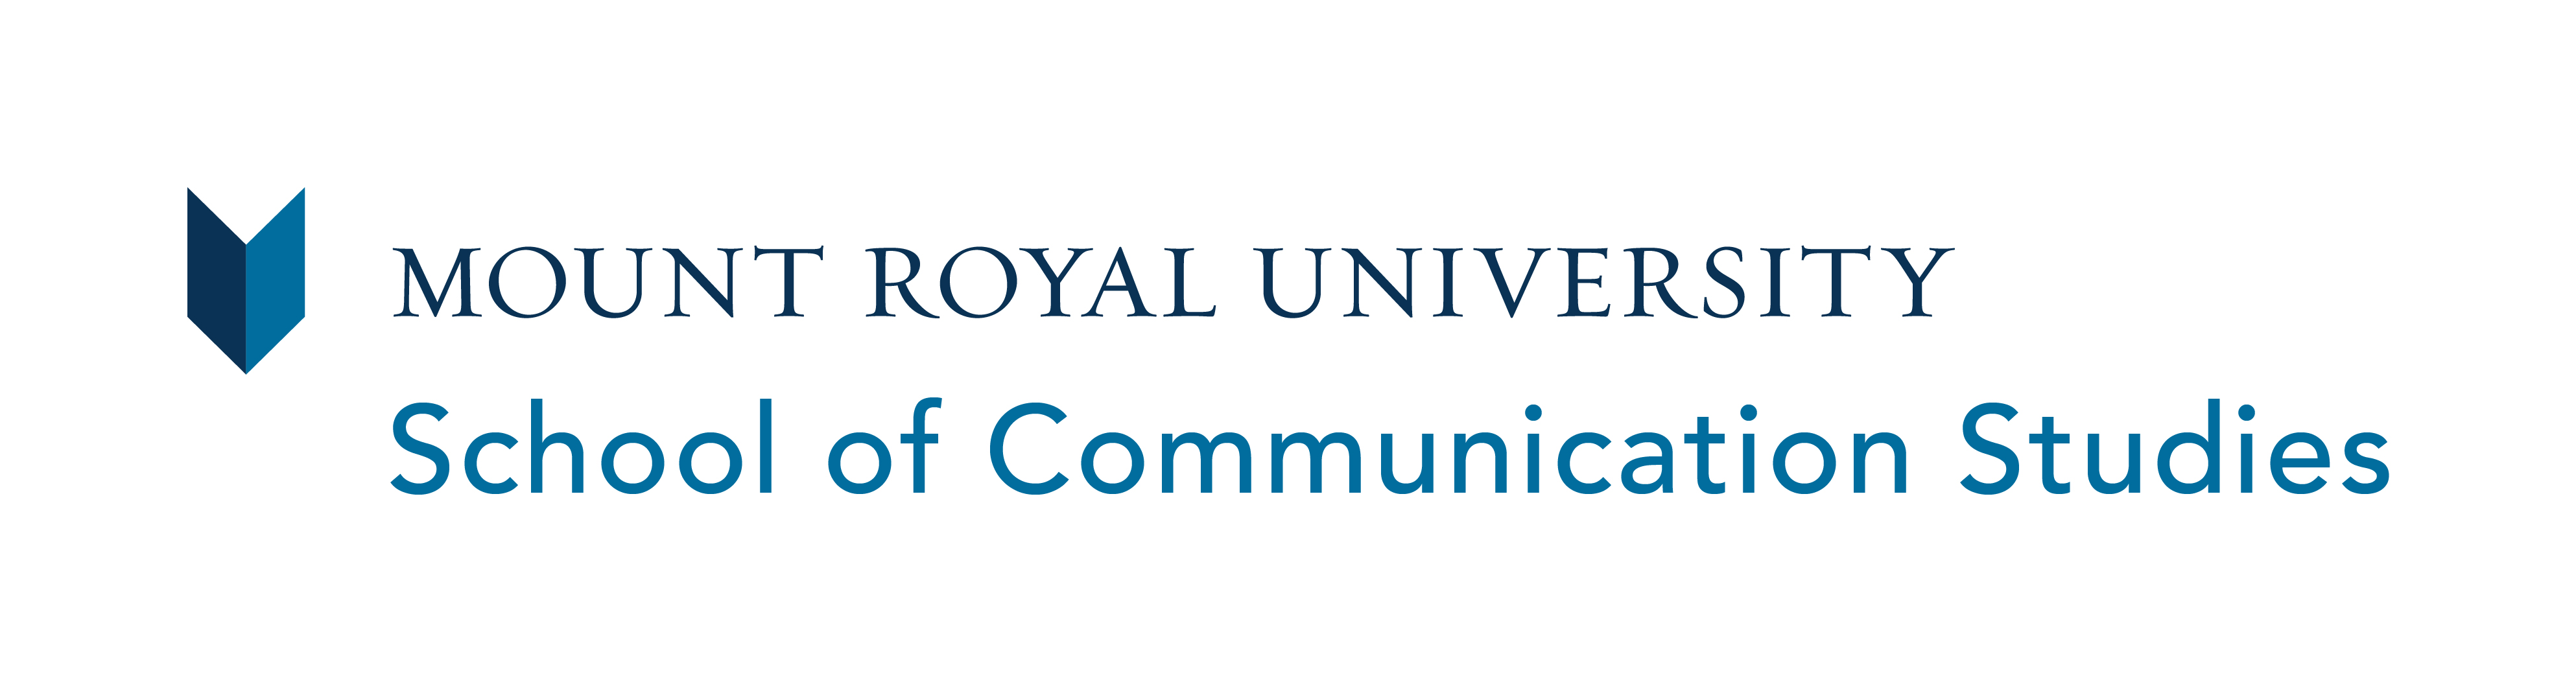 School of Communication Studies logo